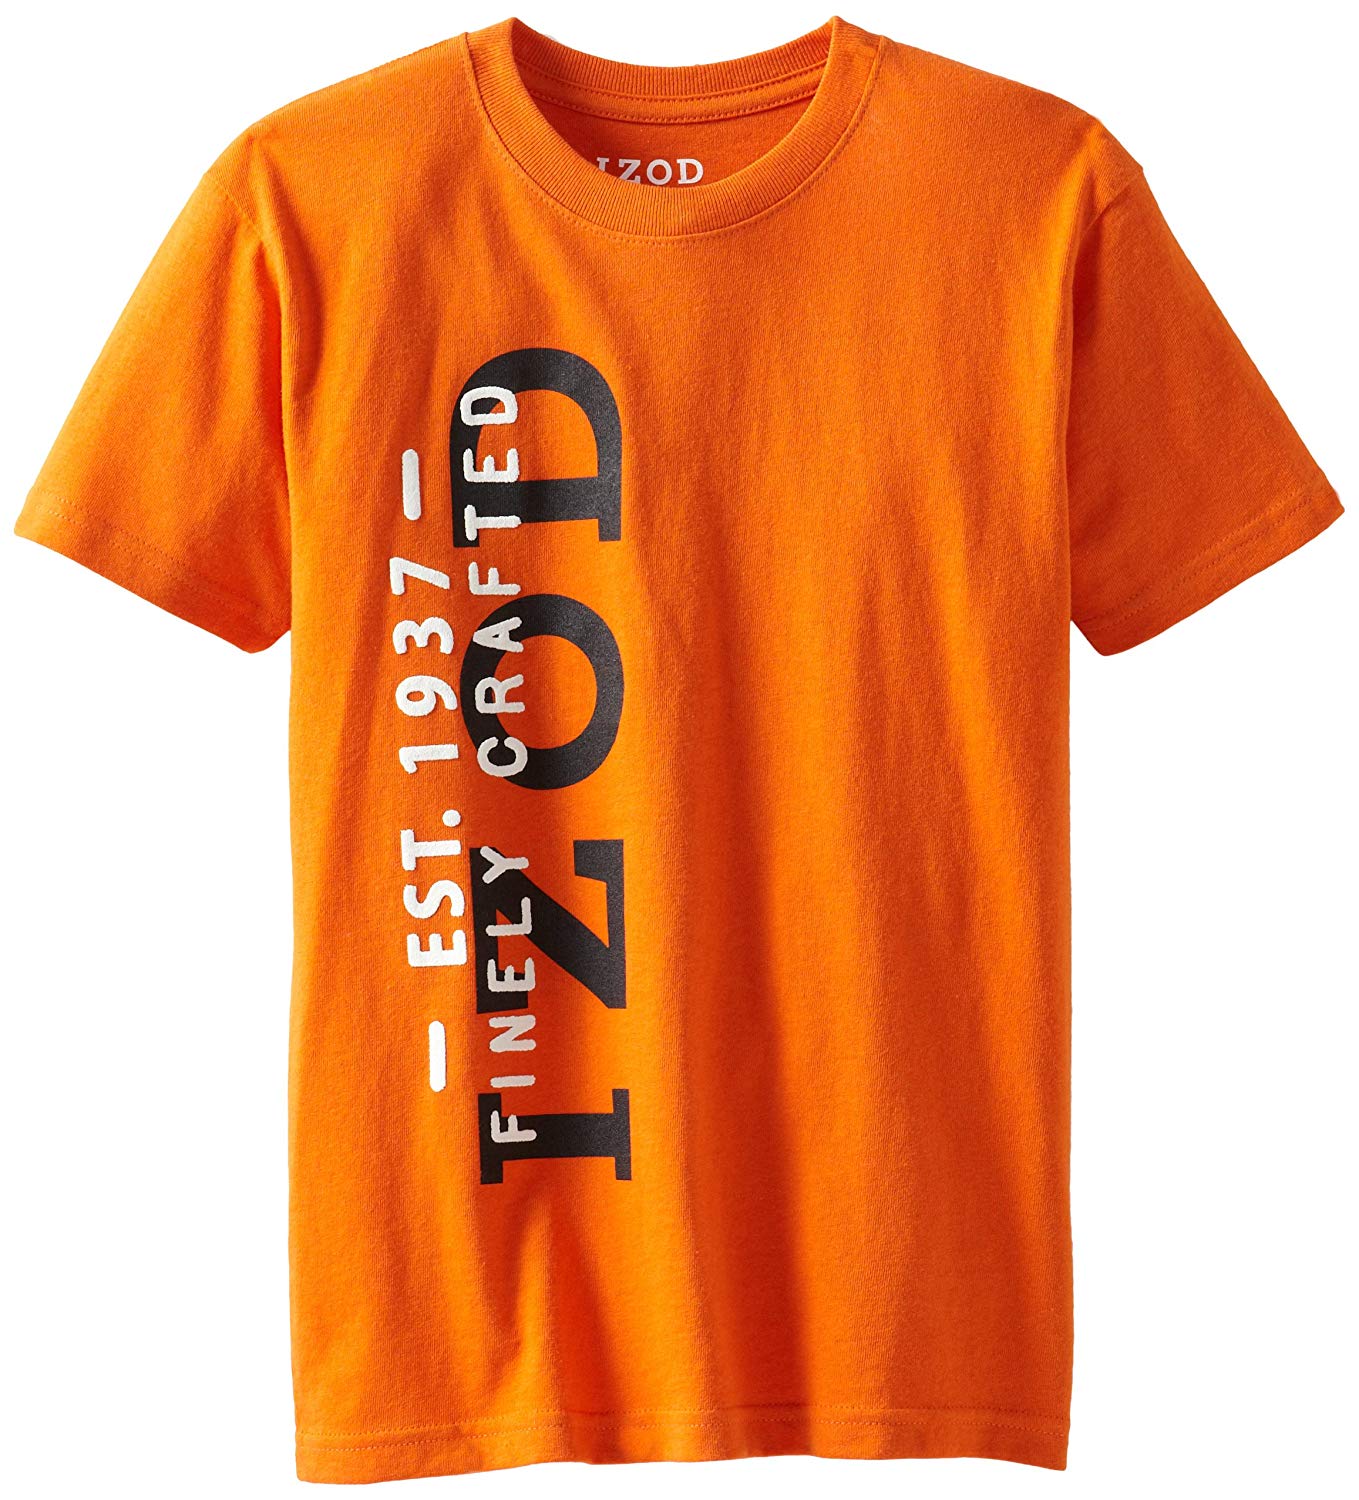 Izod Shirt Logo - IZOD Big Boys' Logo Vertical Tee, Clementine, Medium 10